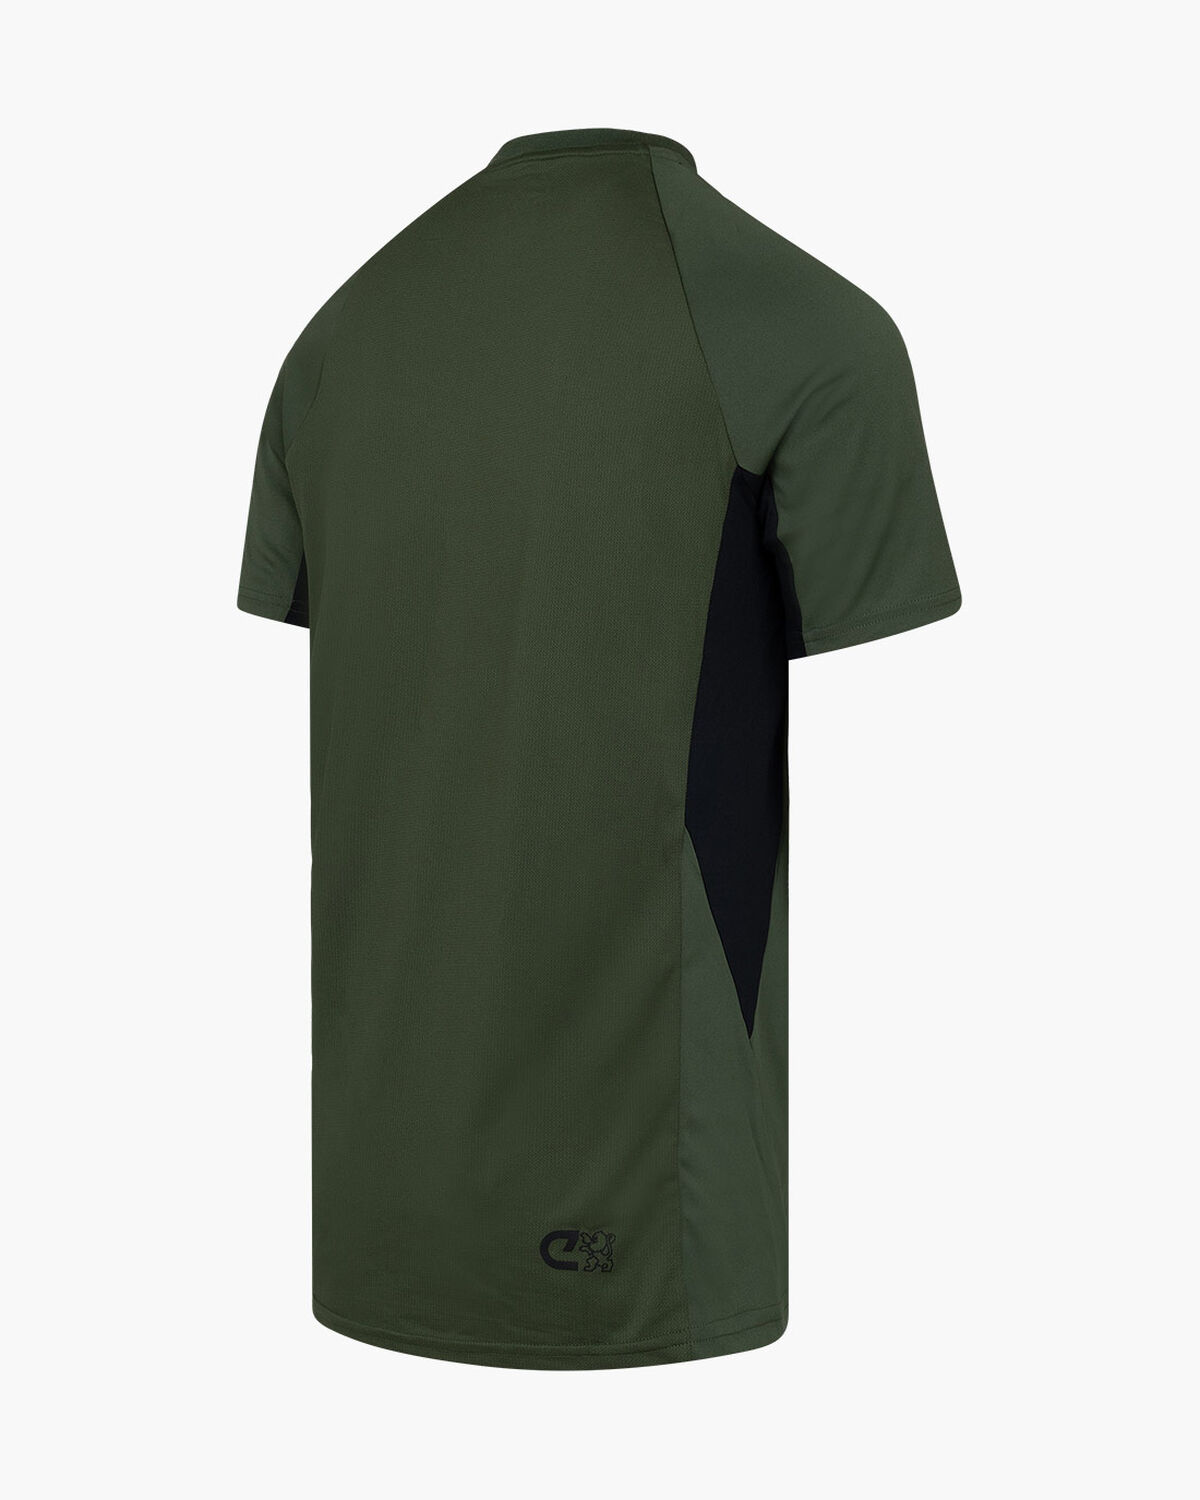 Cruyff Tech Turn Shirt Junior, Green/Black, hi-res